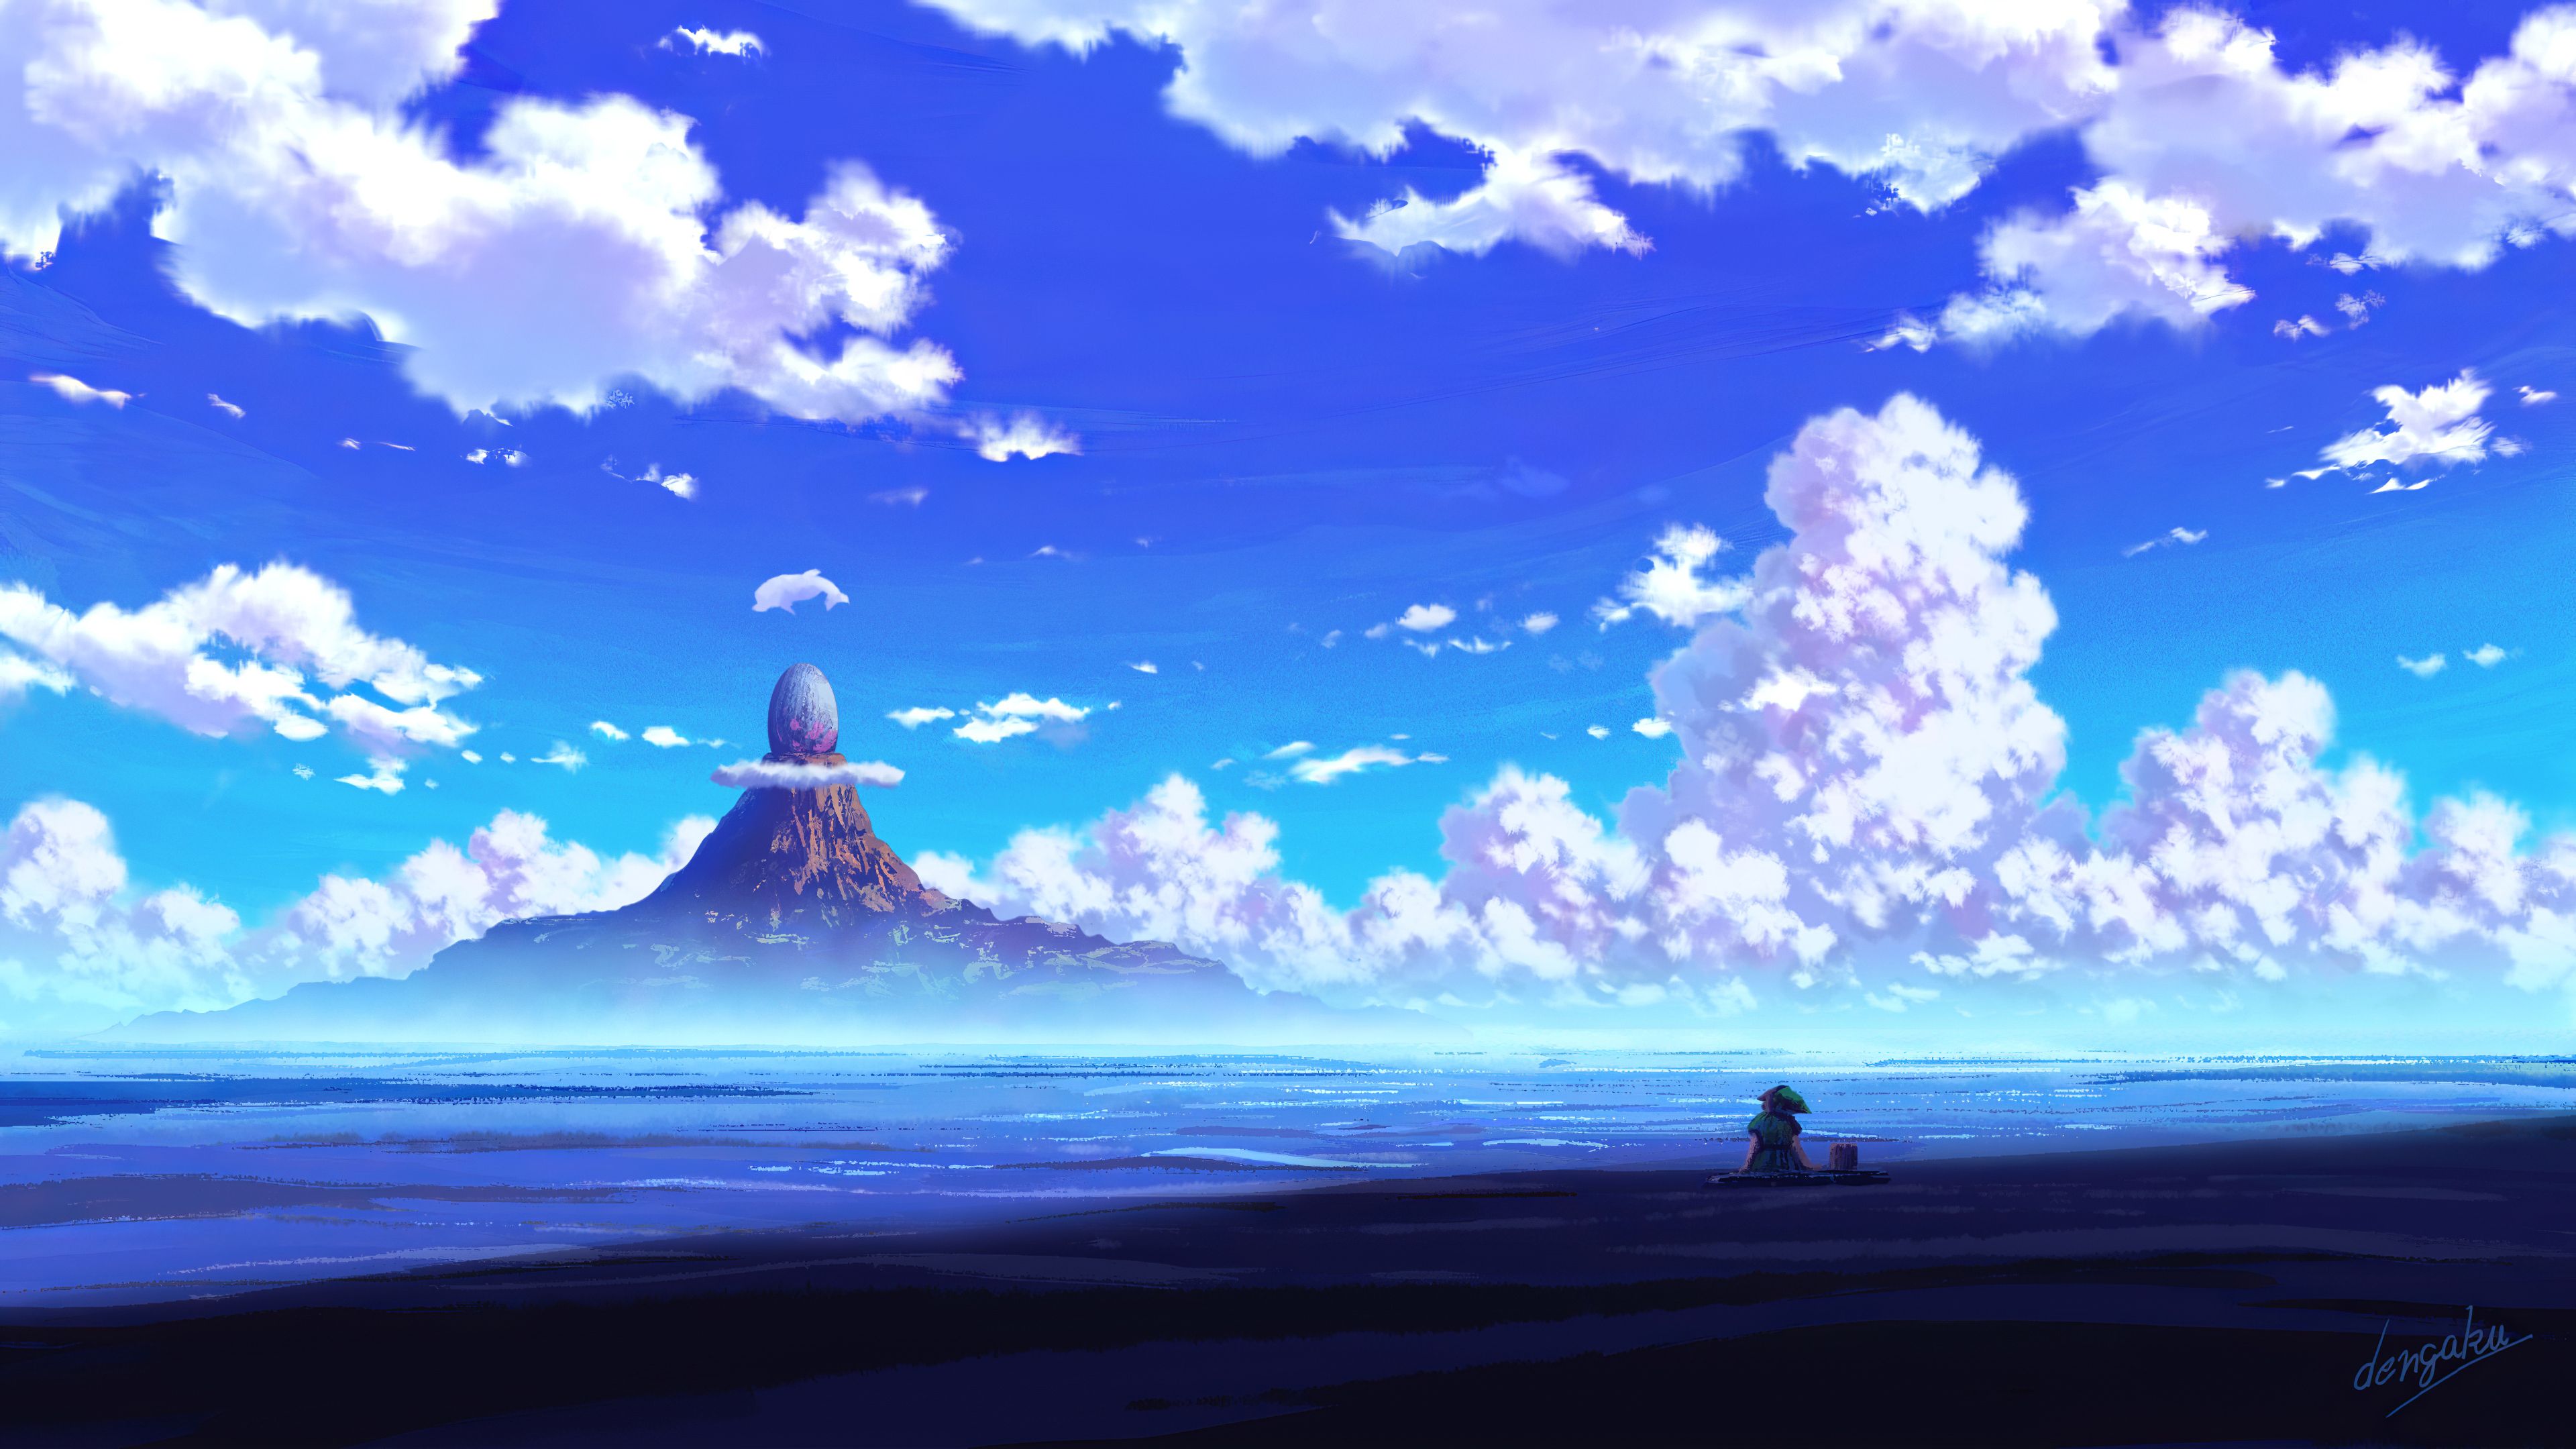 Anime Scenery Wallpapers 4k Desktop.